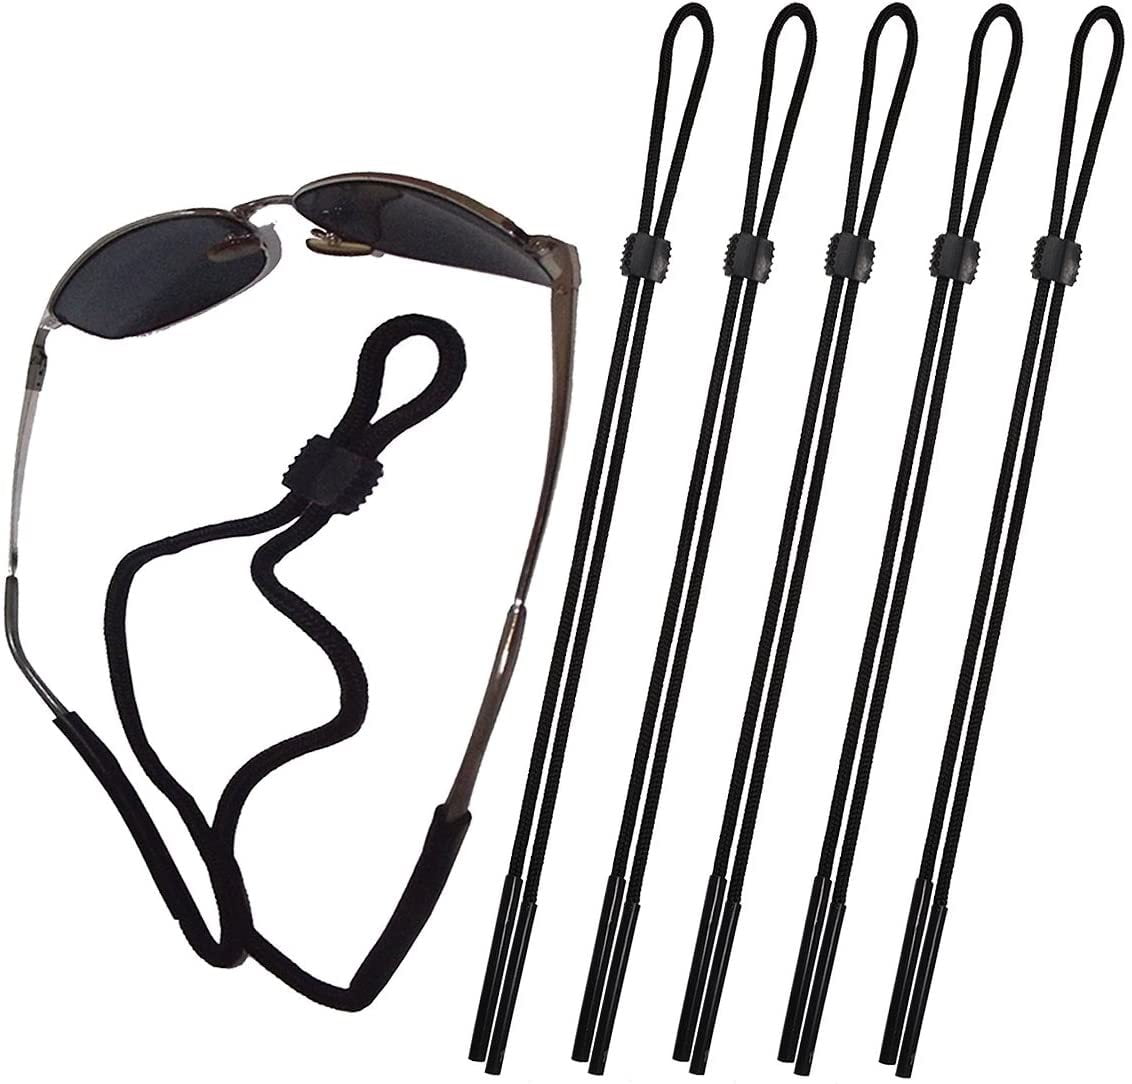 Eyeglasses String Holder Strap Cord Metal free Glasses Cord for Men Women Colorful Sunglass Lanyard Holders Around Neck 